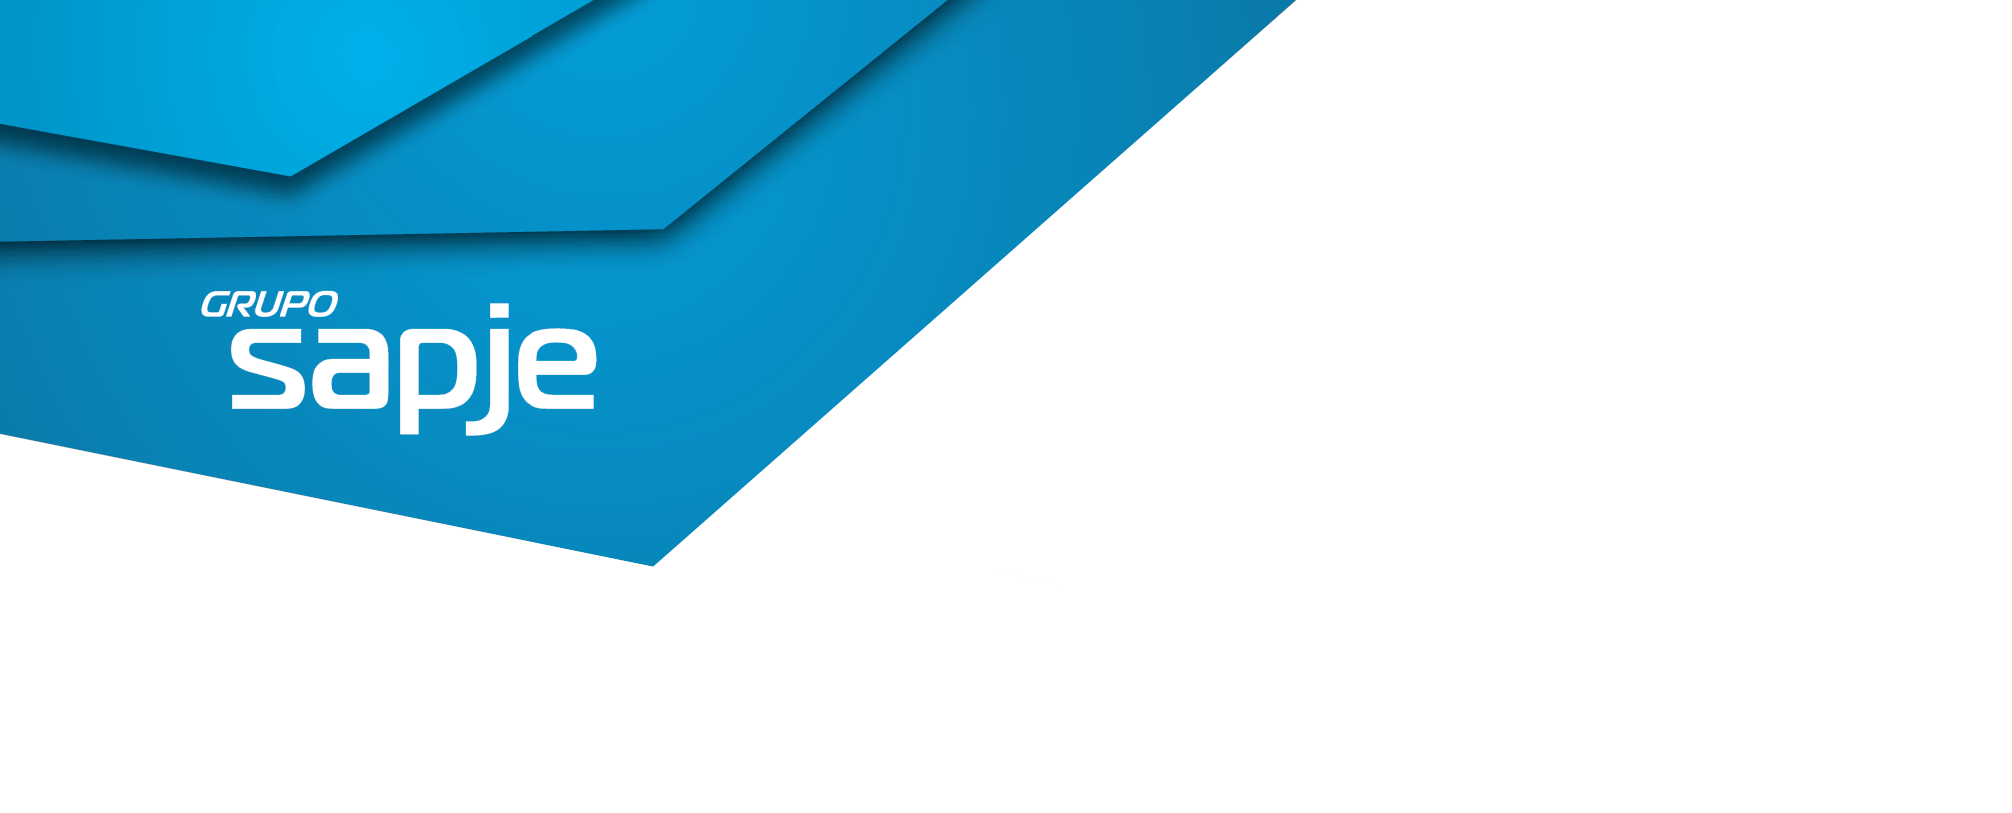 Cabecera con logo del grupo SAPJE azul celeste